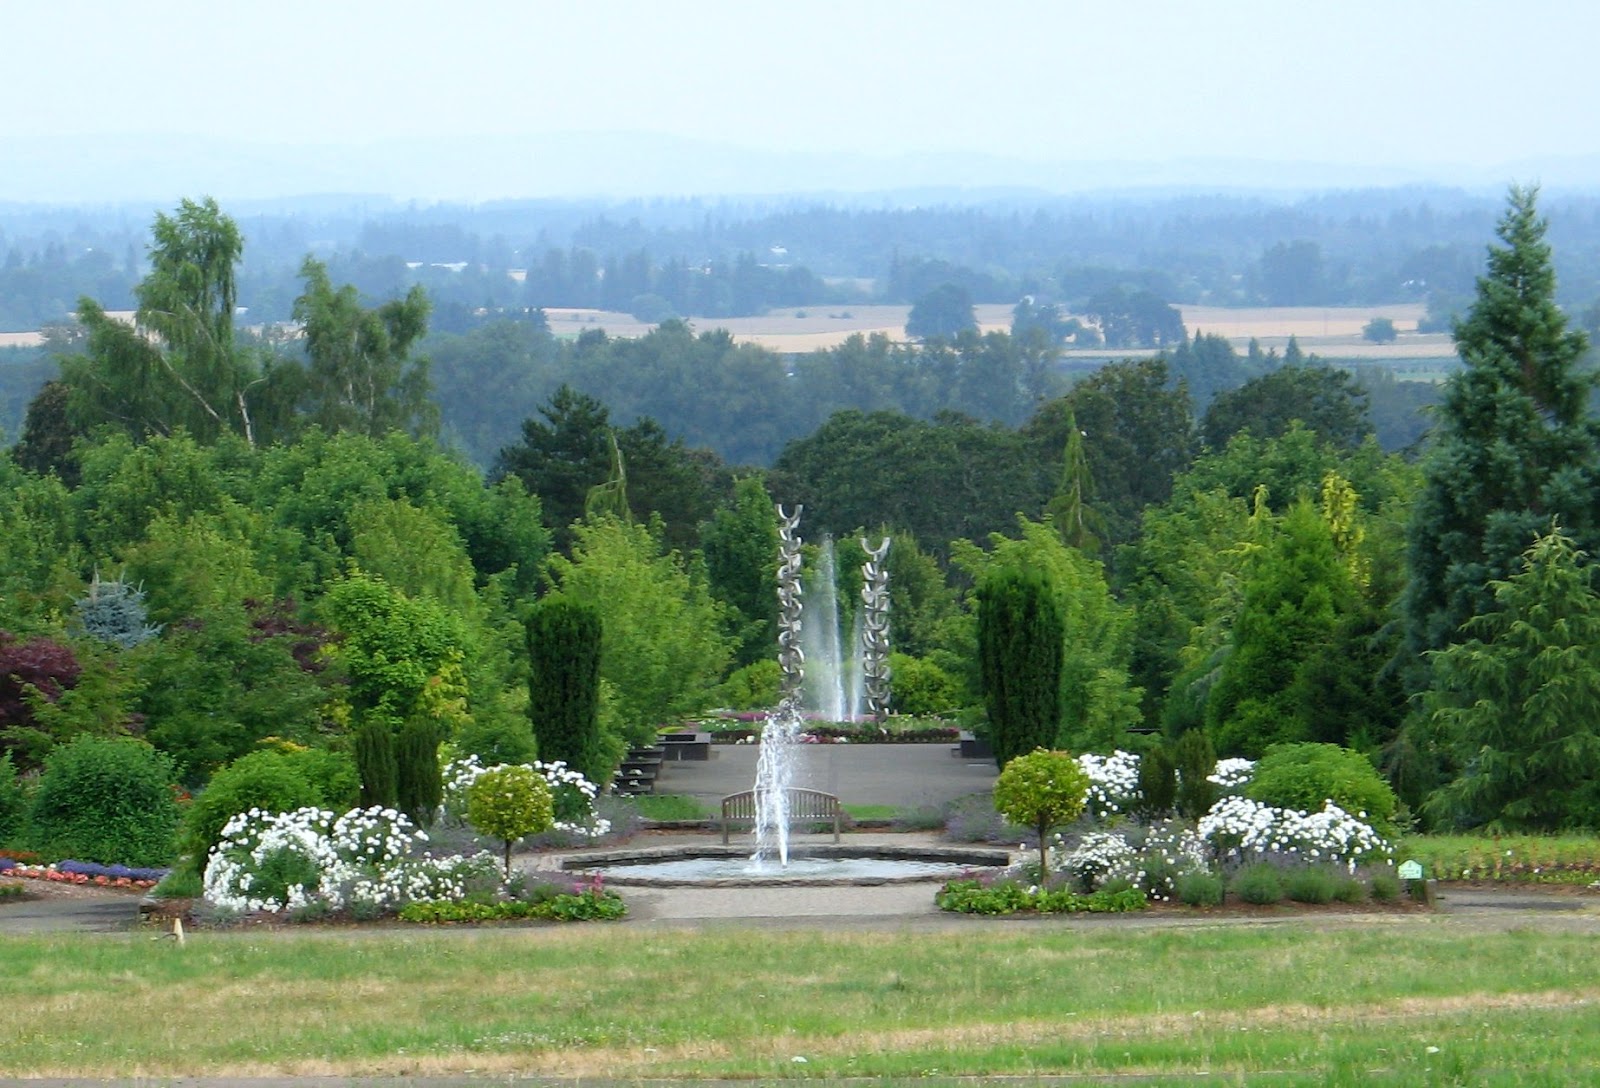 Idyll Haven: The Oregon Garden and Resort